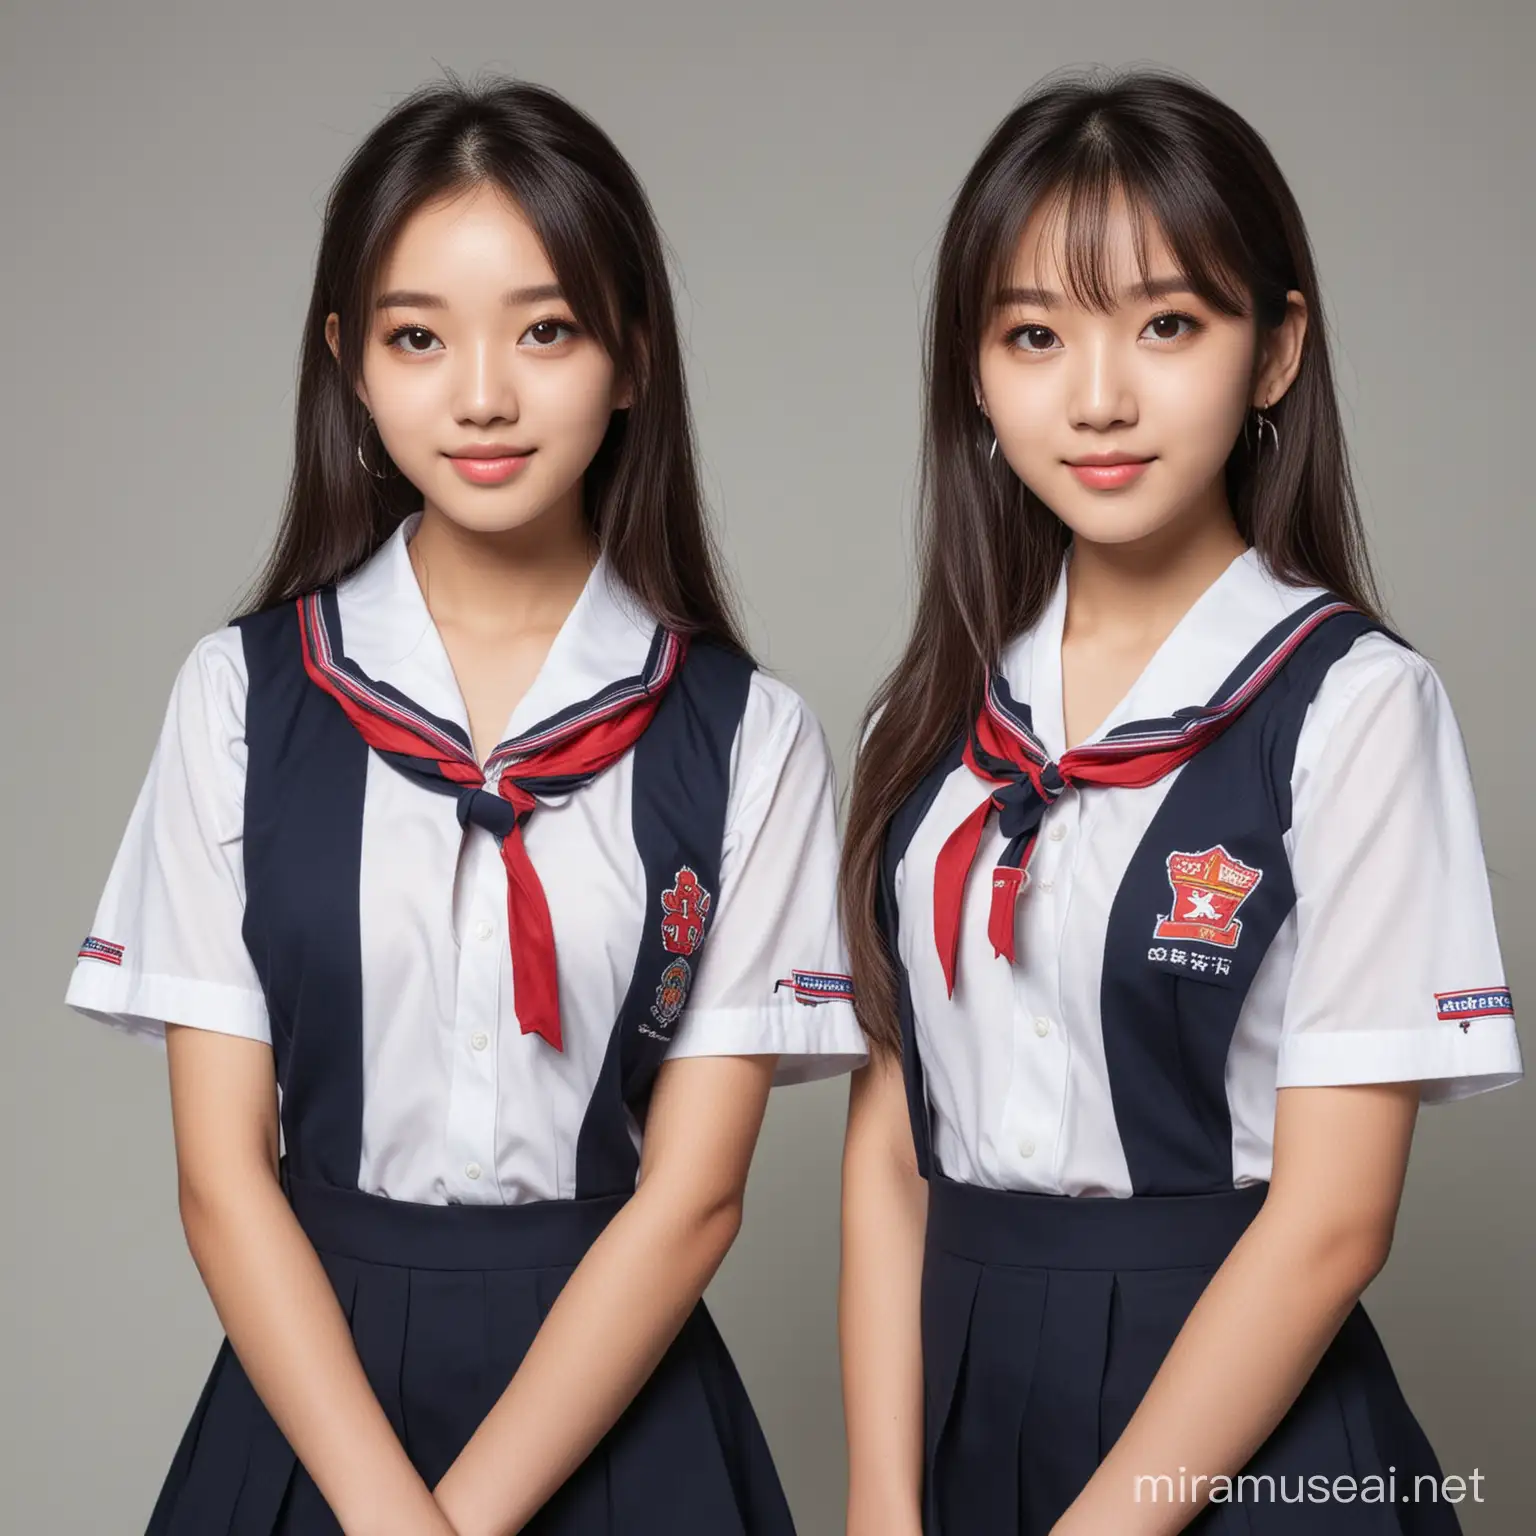 Charming Singaporean School Girls in KPop Style Uniforms